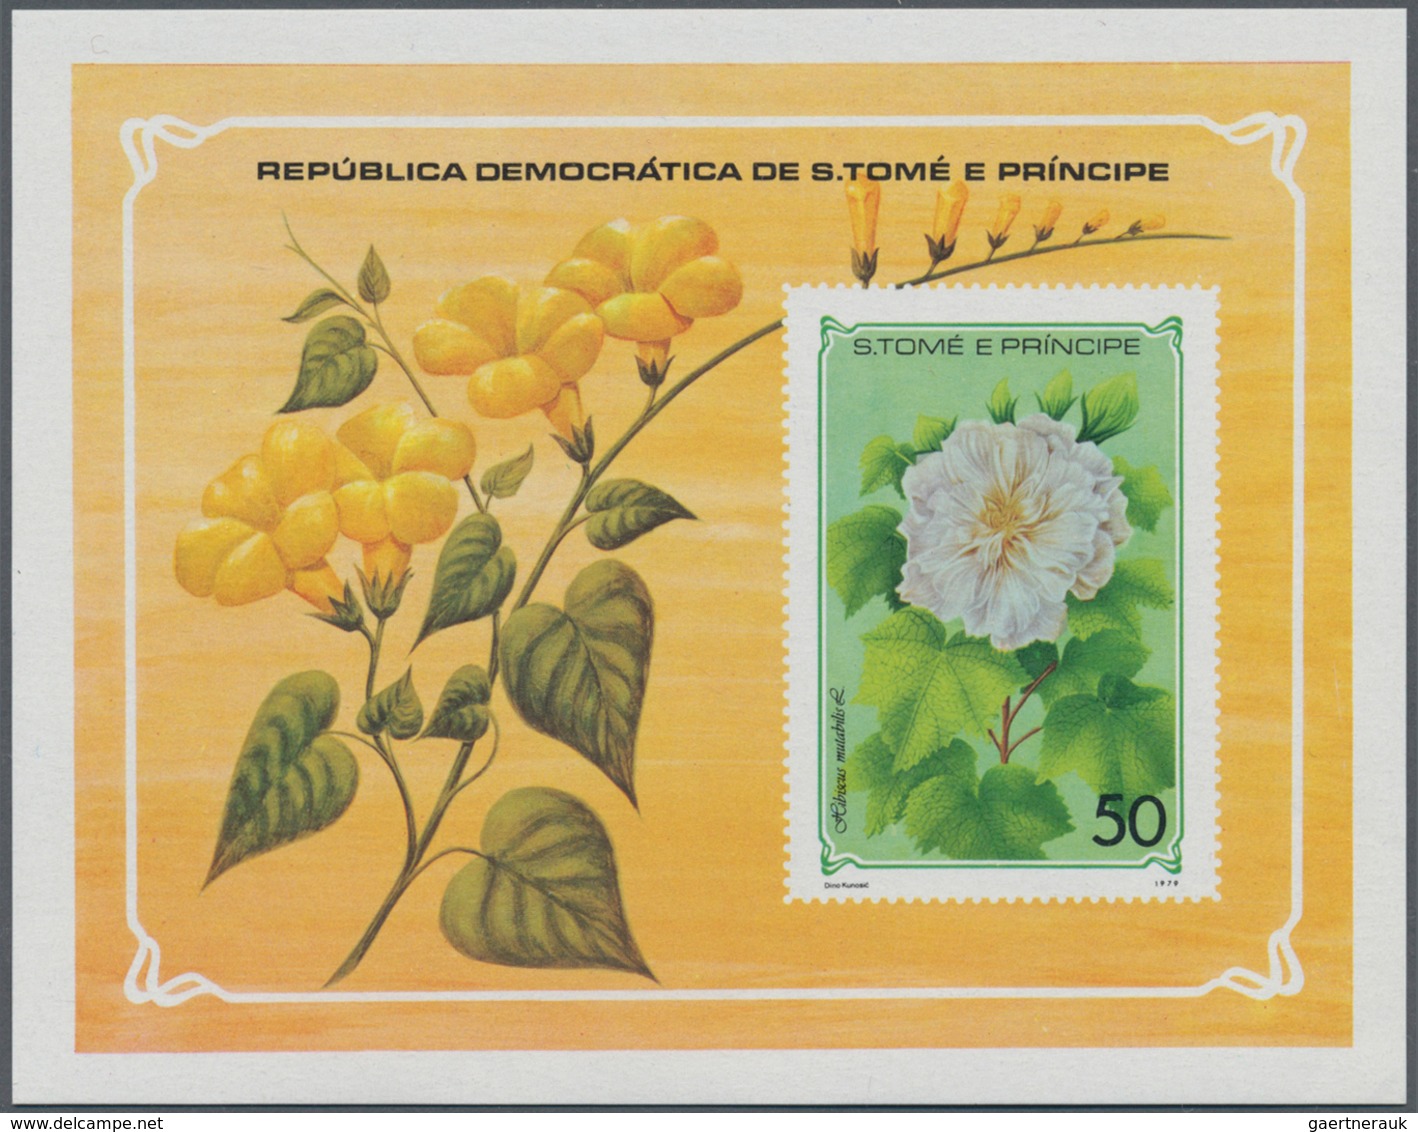 24777 Portugiesische Kolonien In Afrika: 1979/2005 (ca.), Accumulation In Glassines Etc. In Box With Stamp - Congo Portugais